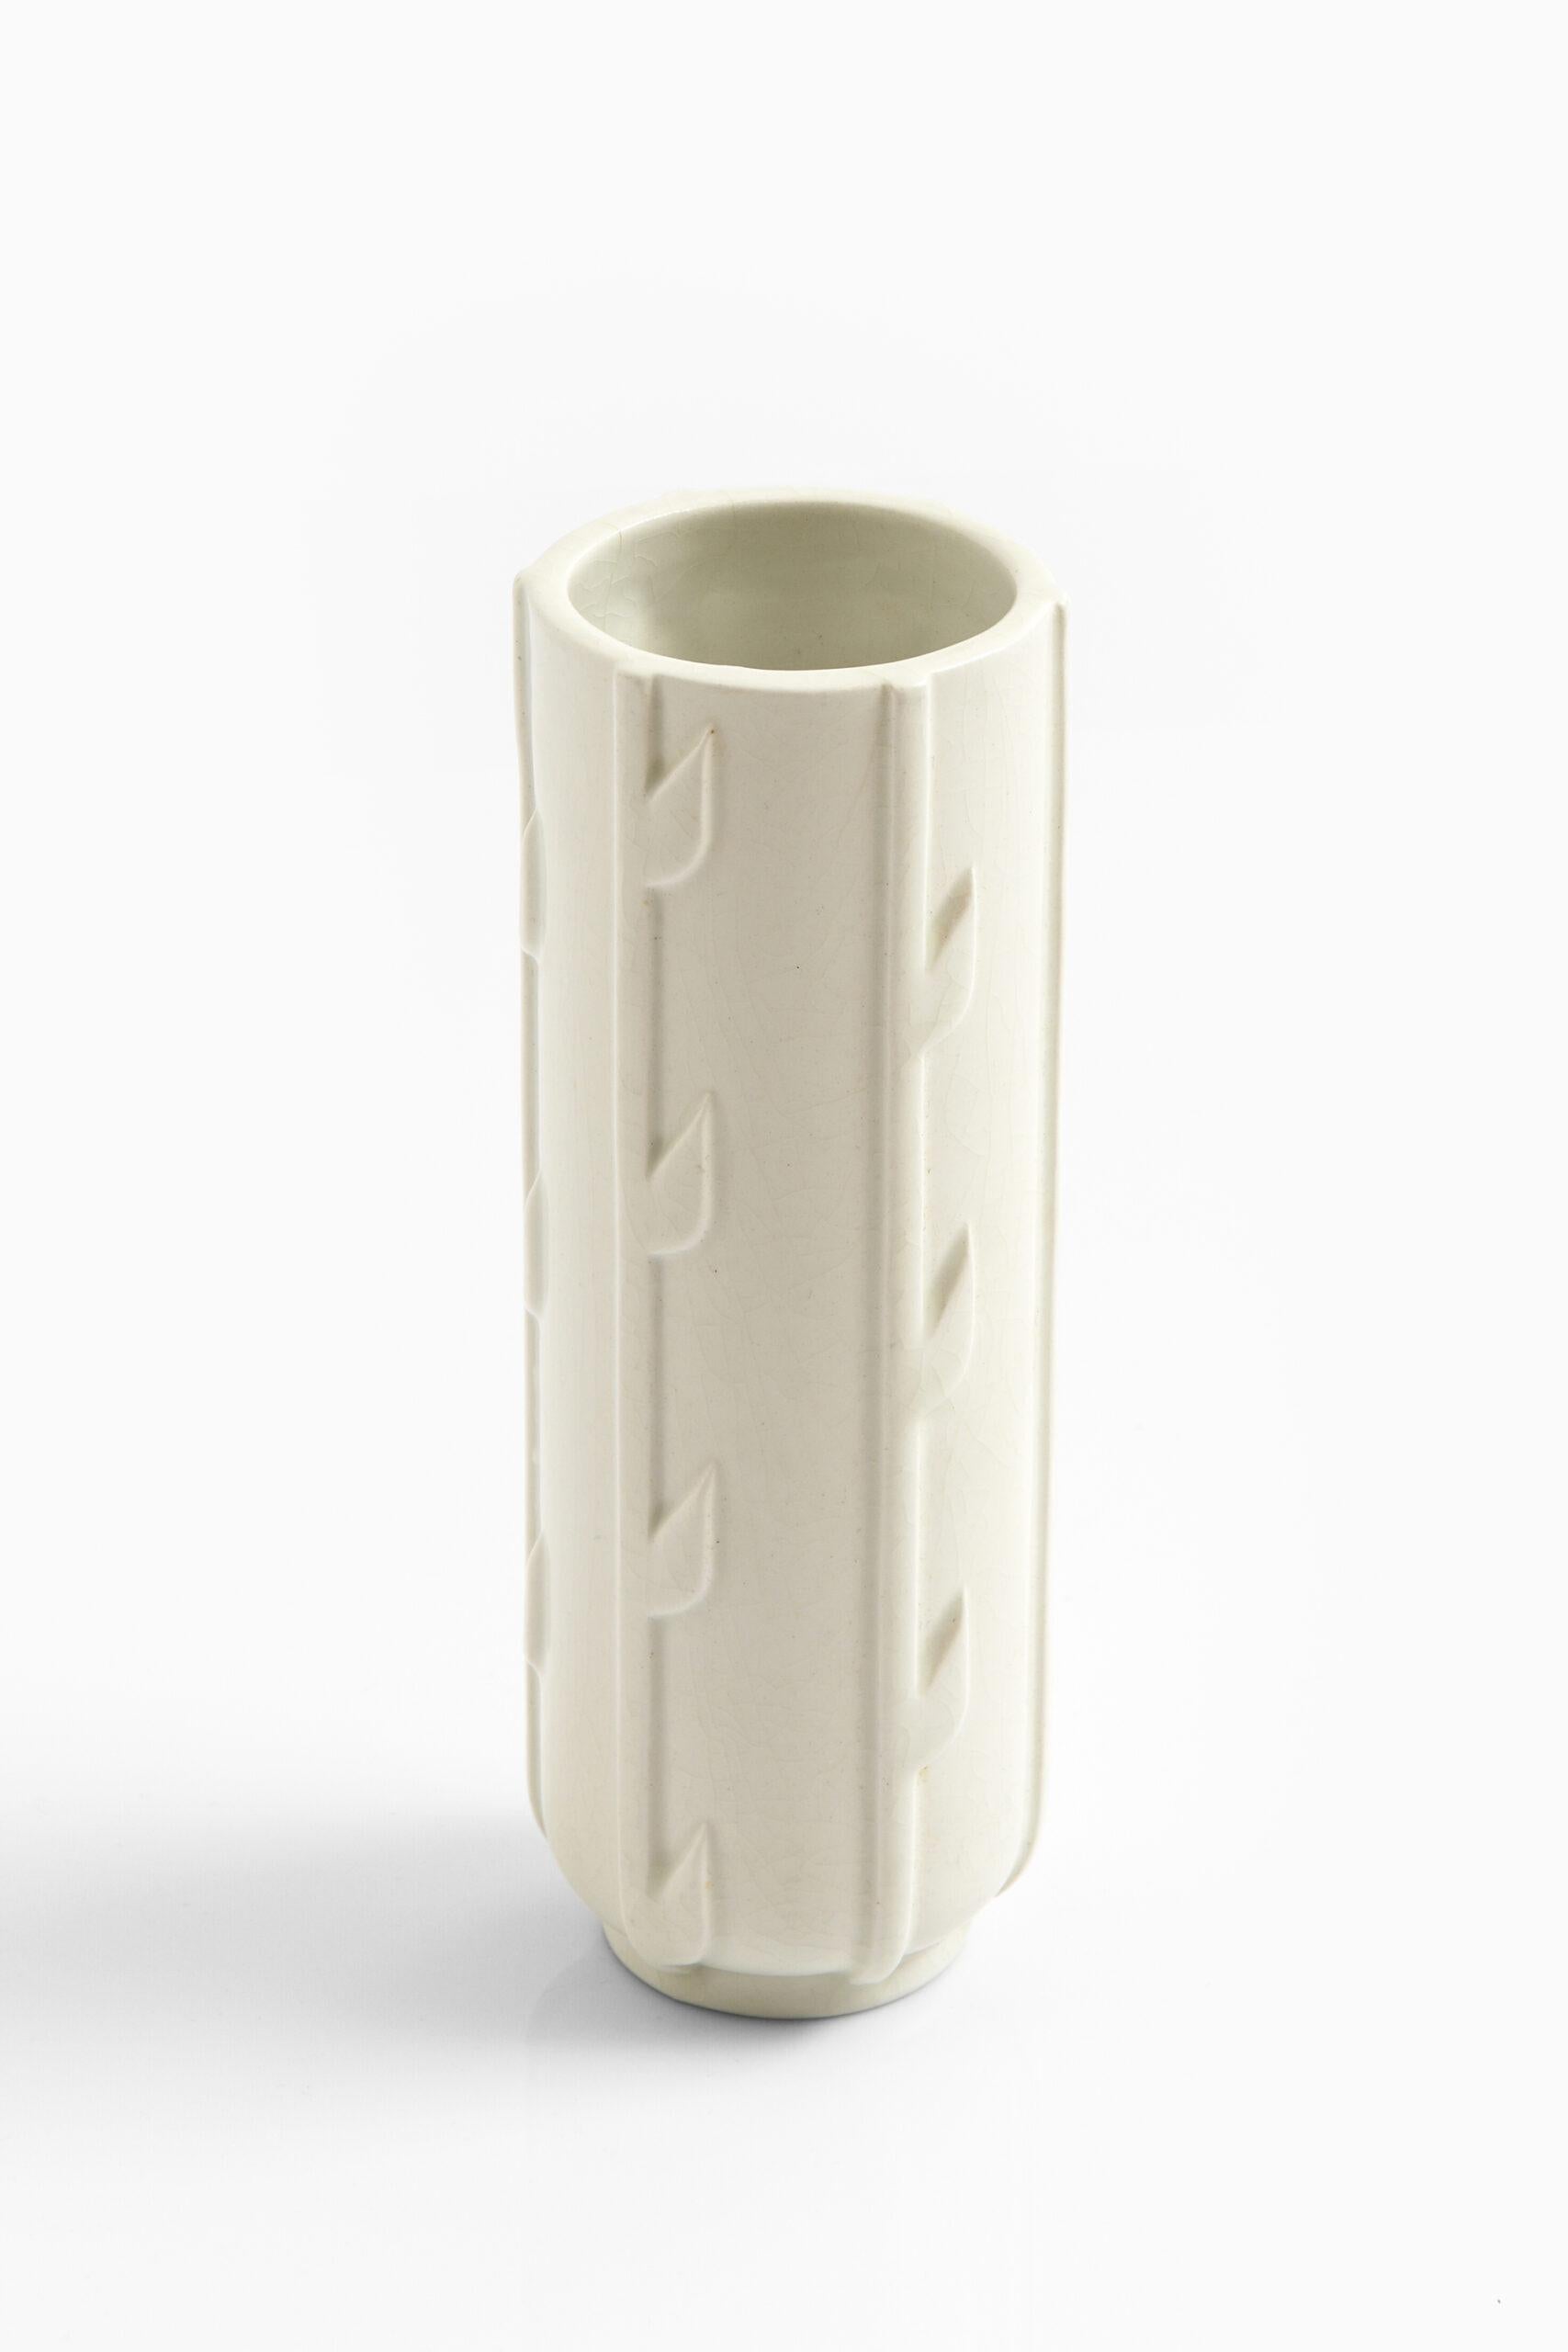 Ceramic vase by unknown designer. Produced in Sweden.